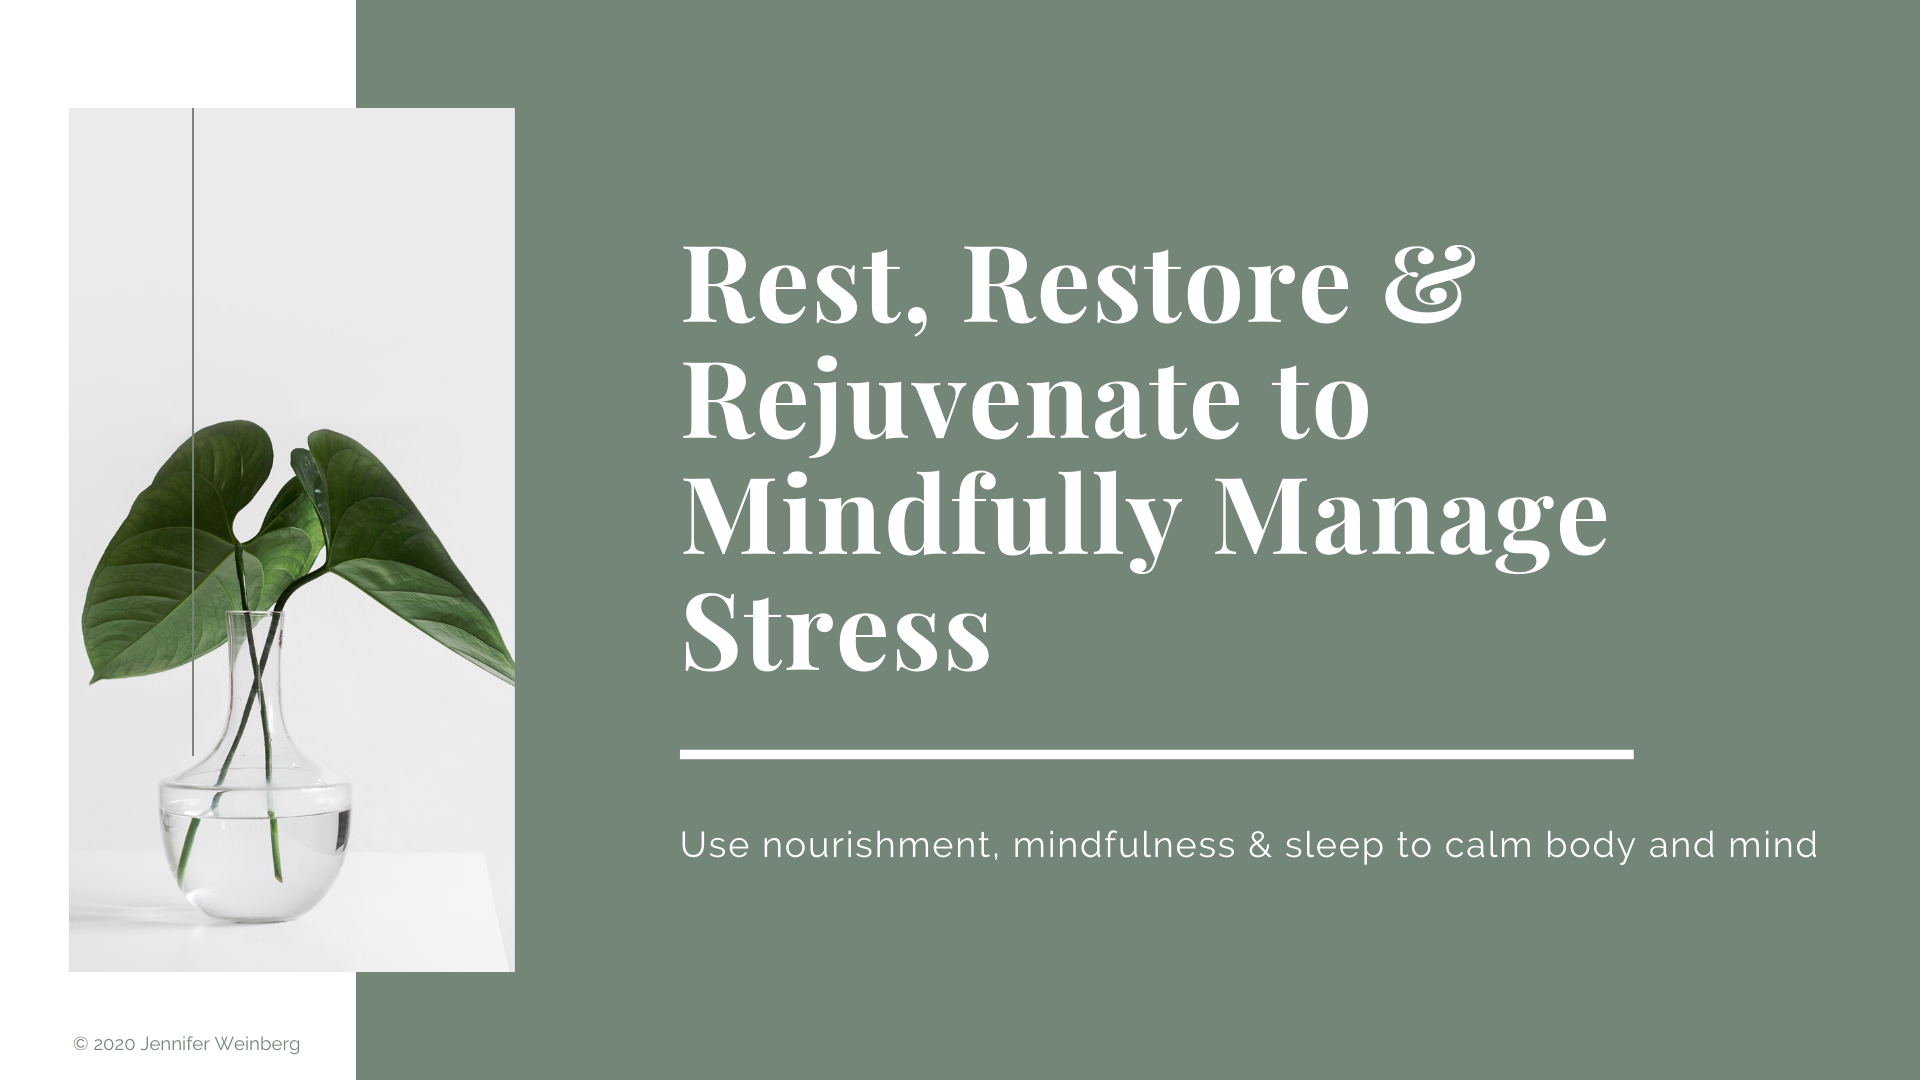 Rest, Restore & Rejuvenate to Mindfully Manage Stress